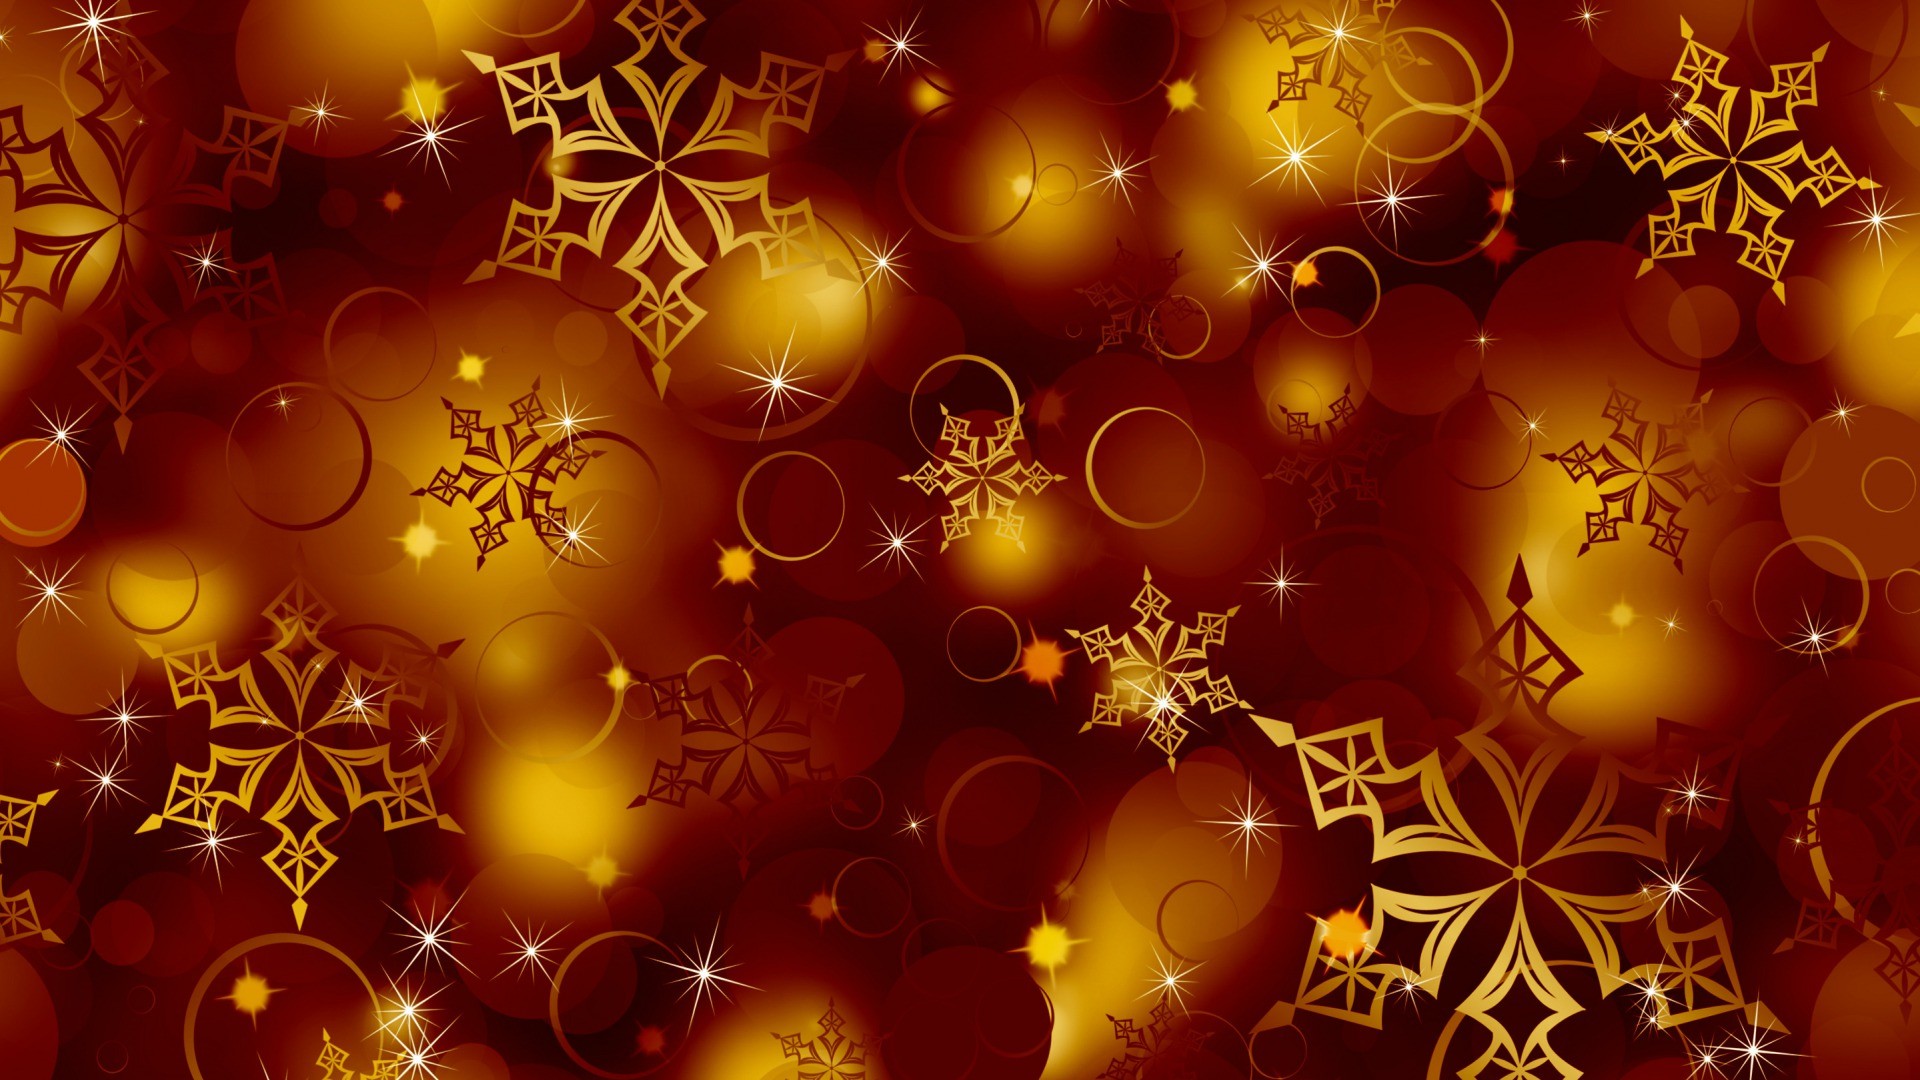 Golden Snowflakes Hd Wallpaper Iphone 7 Plus Iphone 8 Plus